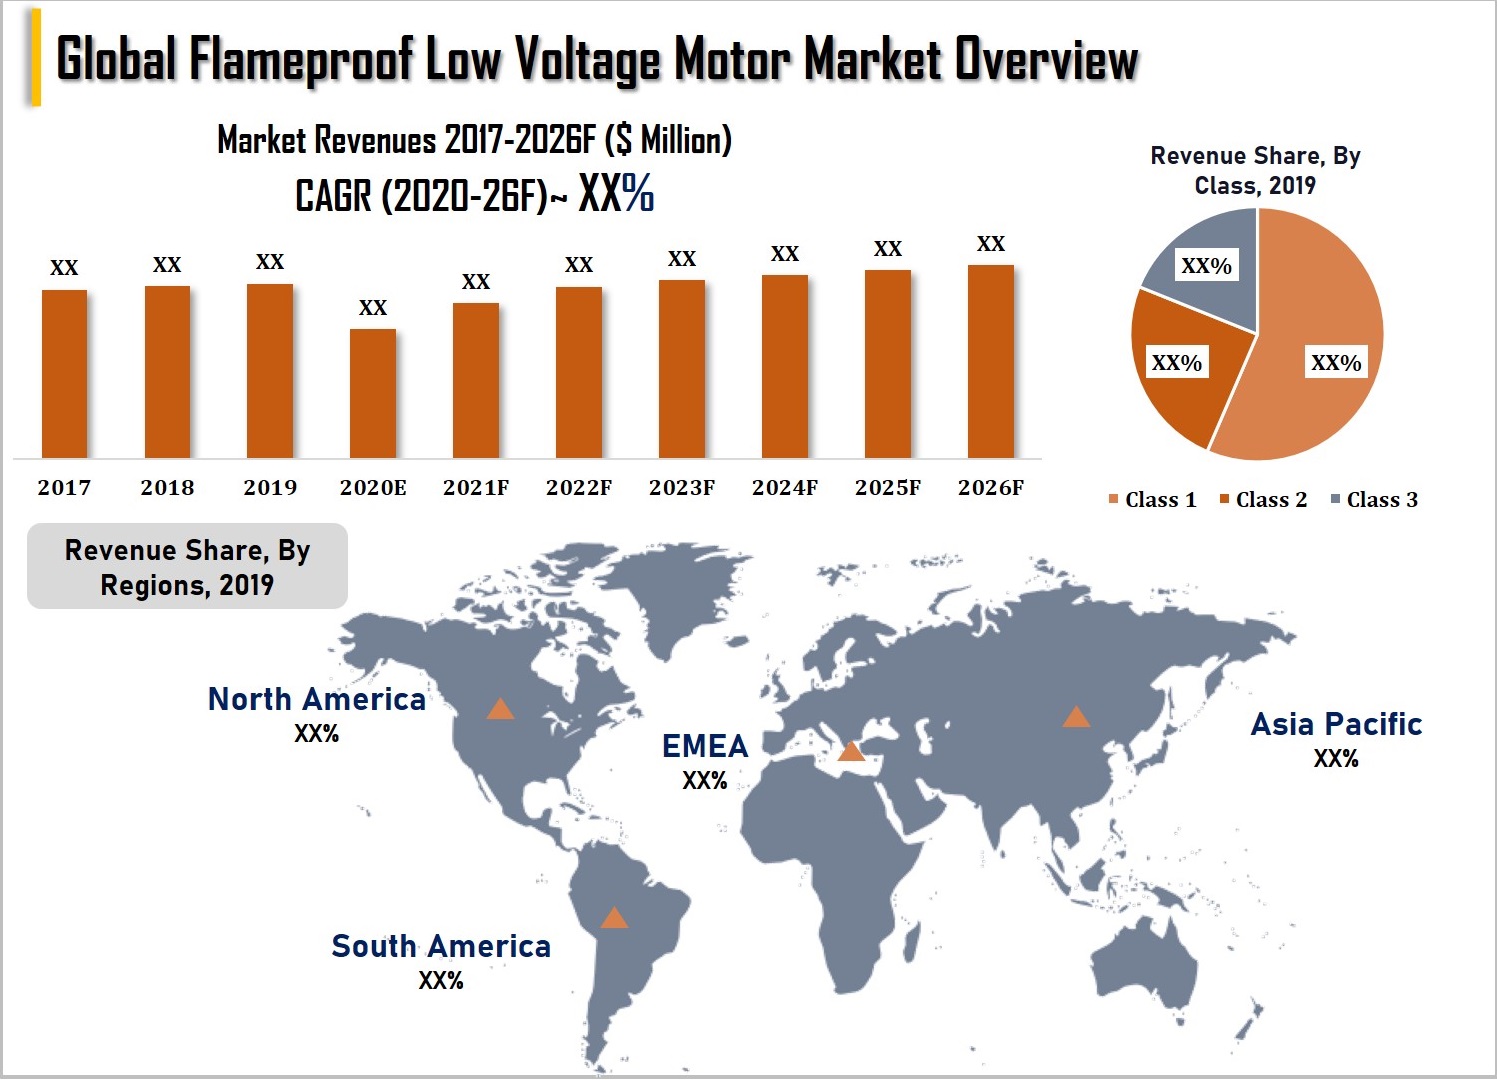 Global Flameproof Low Voltage Motor Market